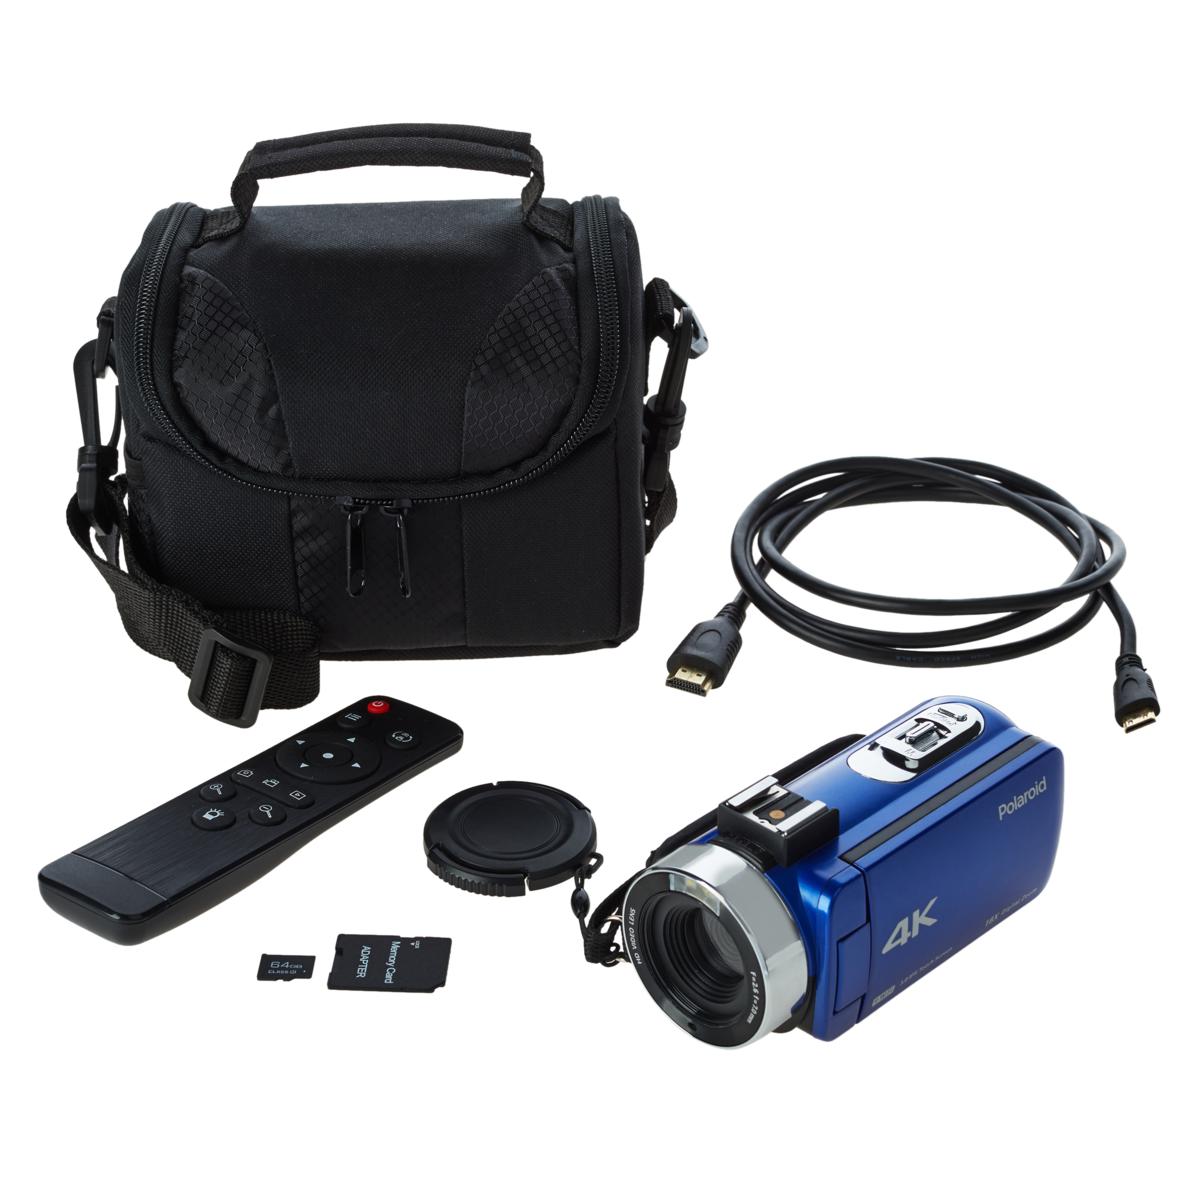 4k-digital-camcorder-id995hd-v1-new-blue-3